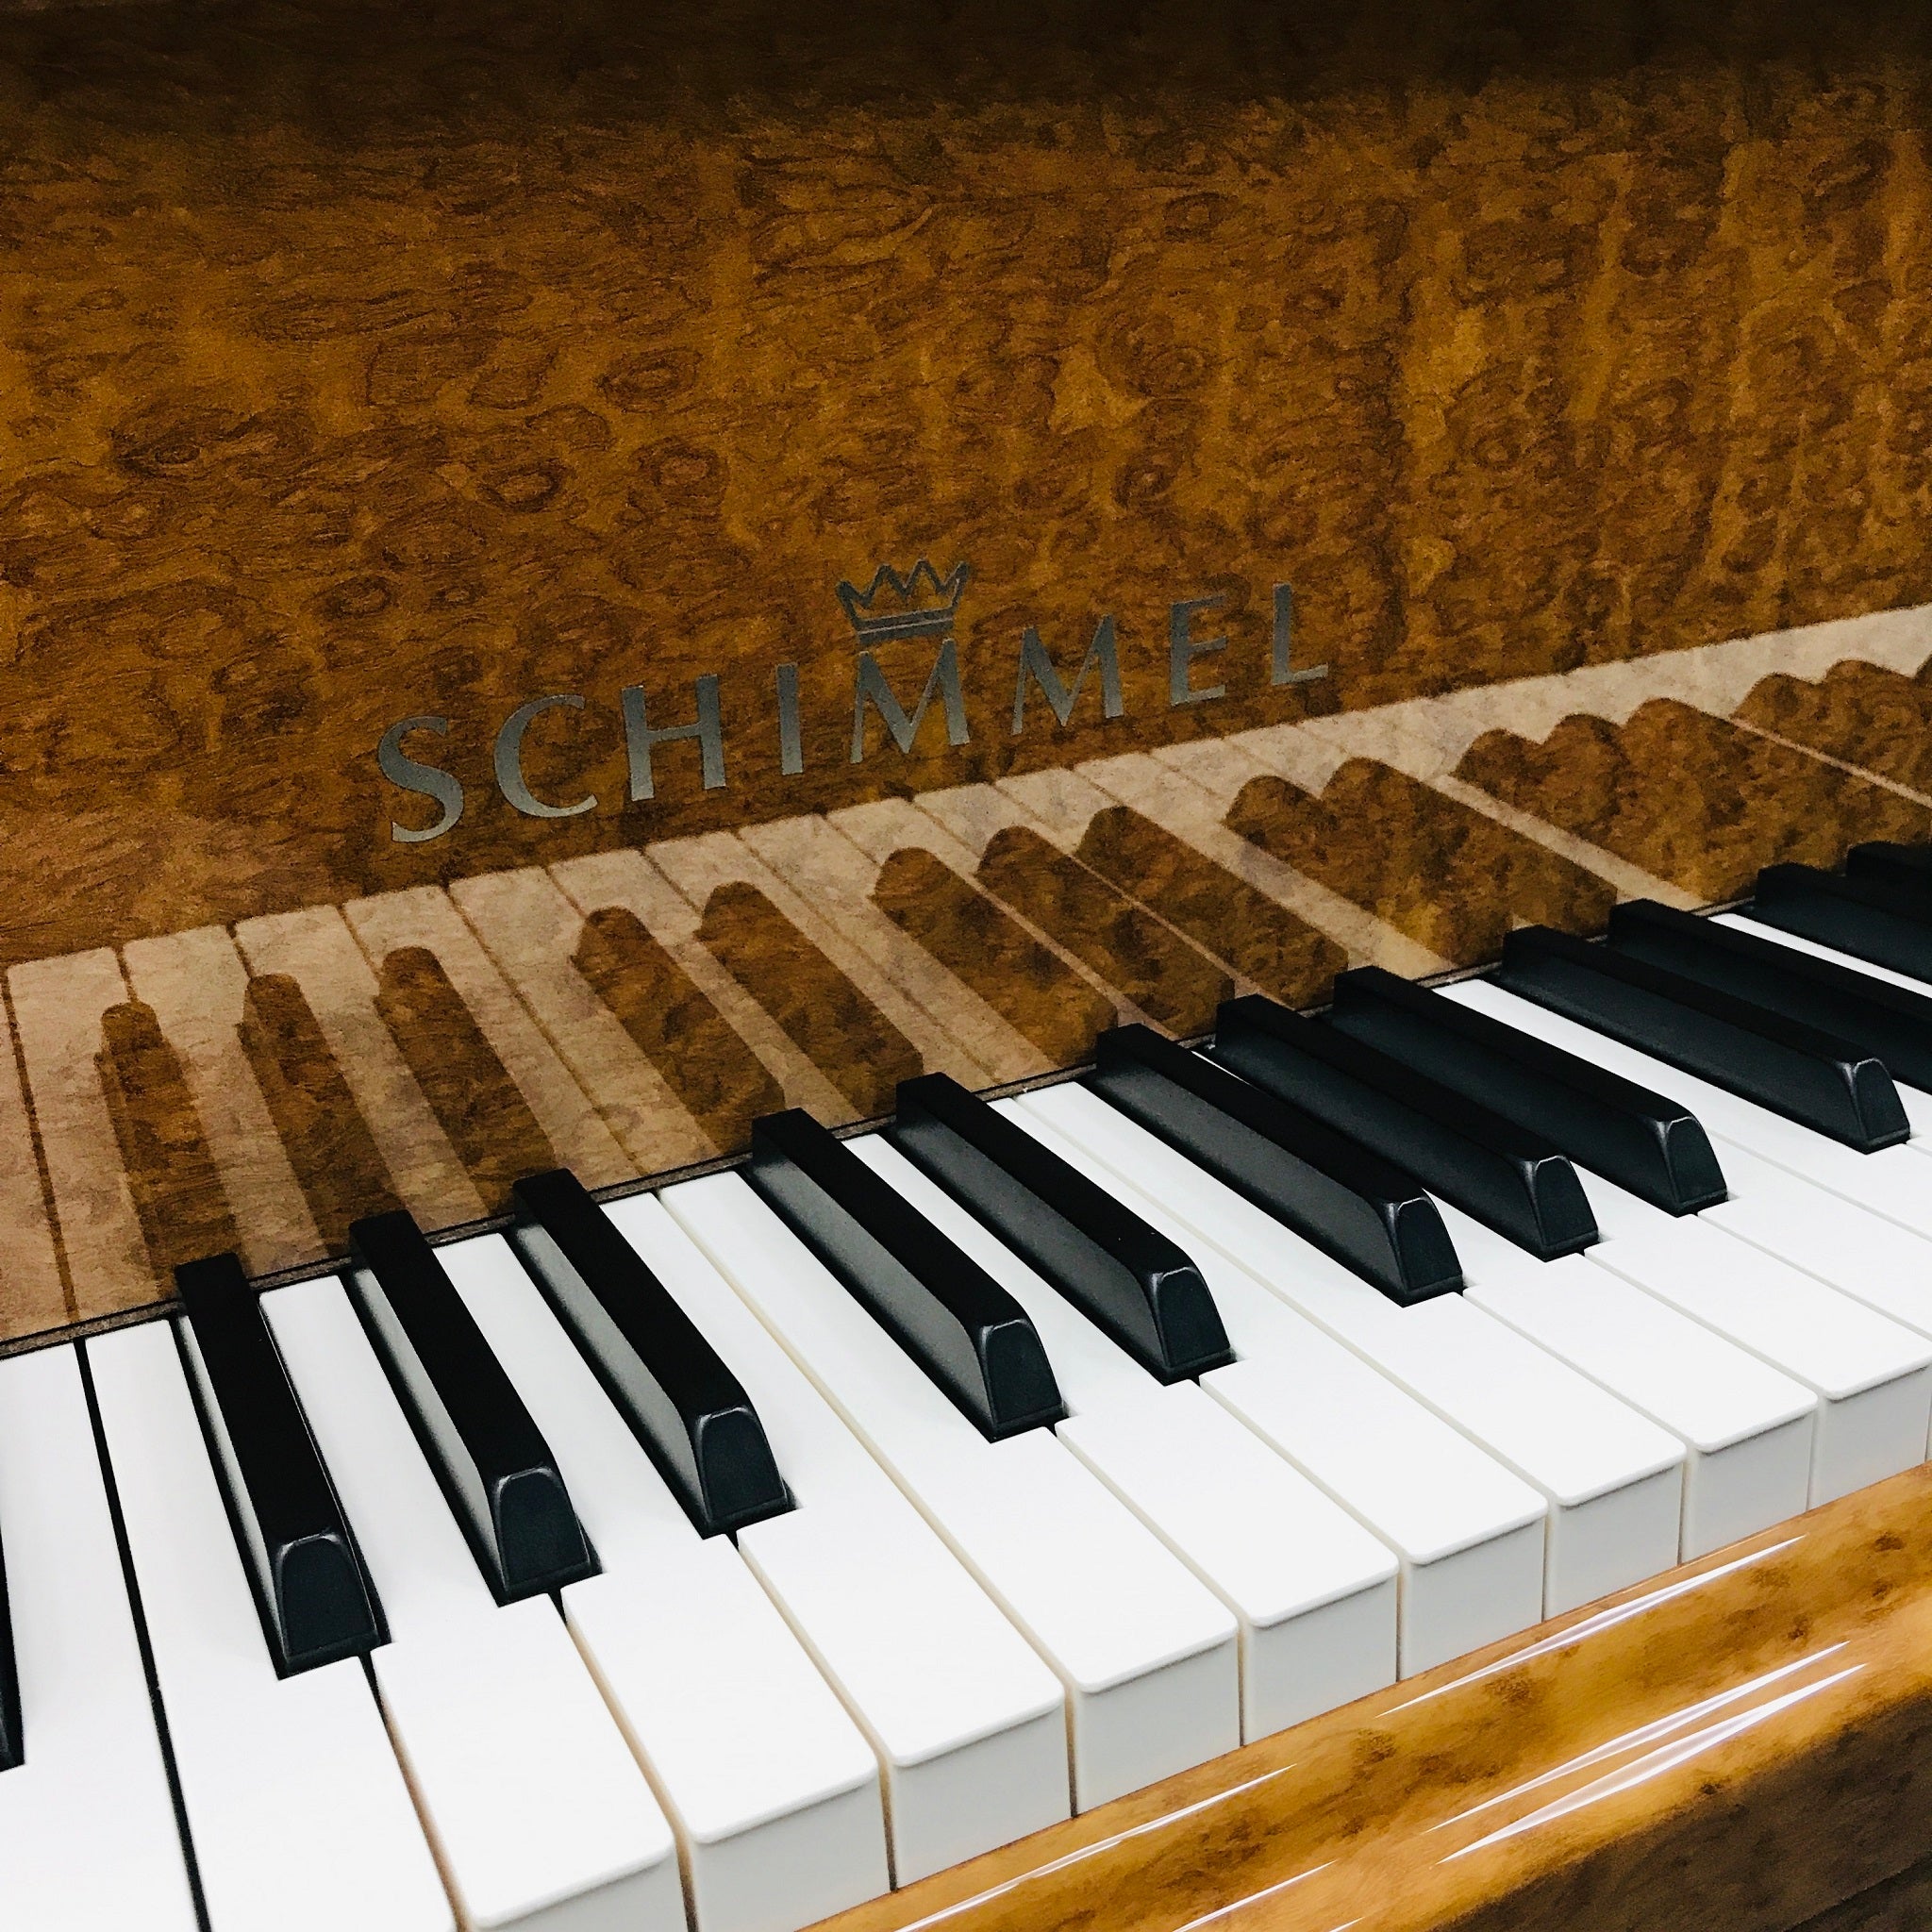 Schimmel C169 Grand Piano Eucalyptus